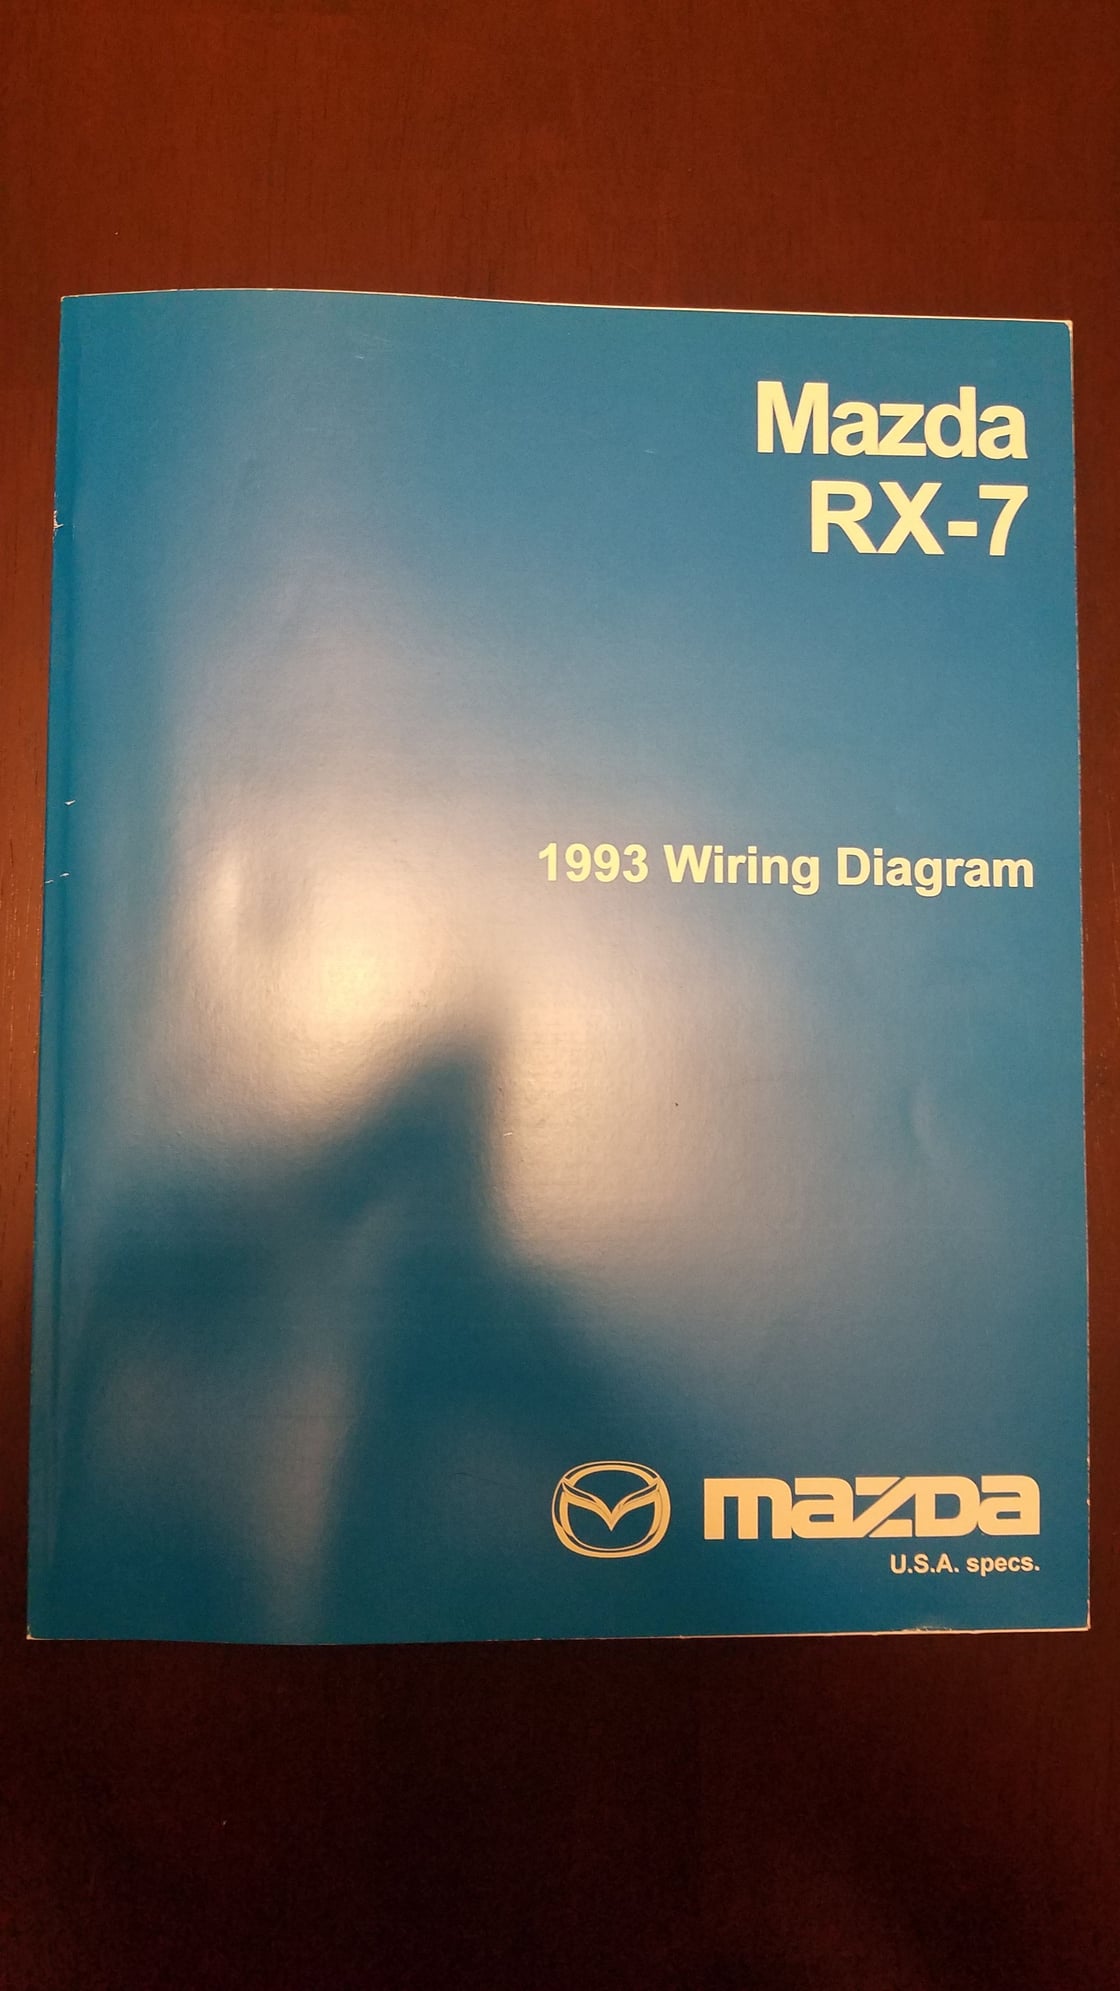 Accessories - 1993 FD RX-7 Wiring Diagram - New - 1993 to 1995 Mazda RX-7 - Austin, TX 78704, United States